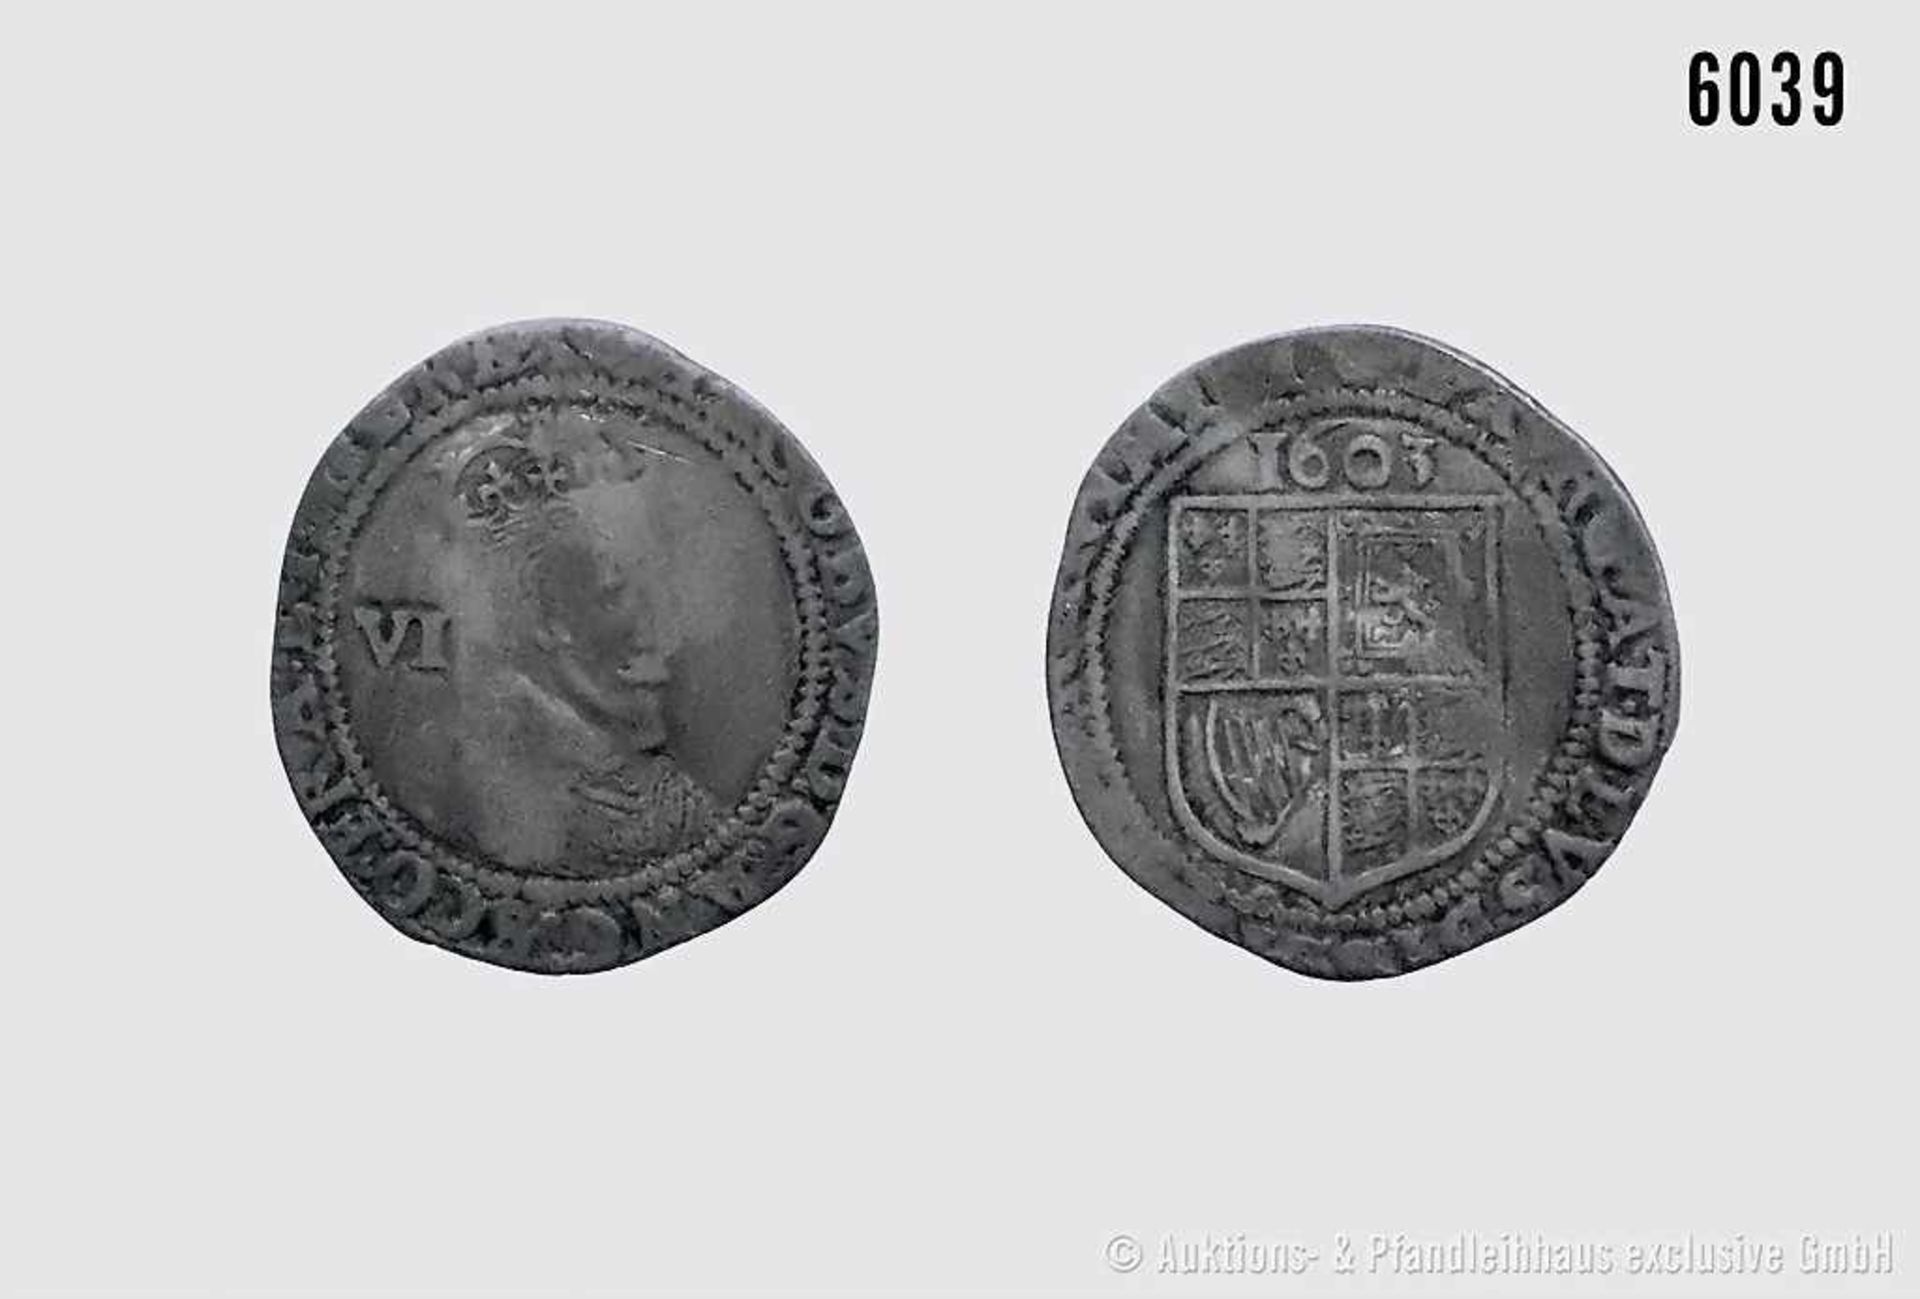 Großbritannien, James I. (1603-1625), Sixpence 1603. Vs. Gekrönte Porträtbüste des Königs nach